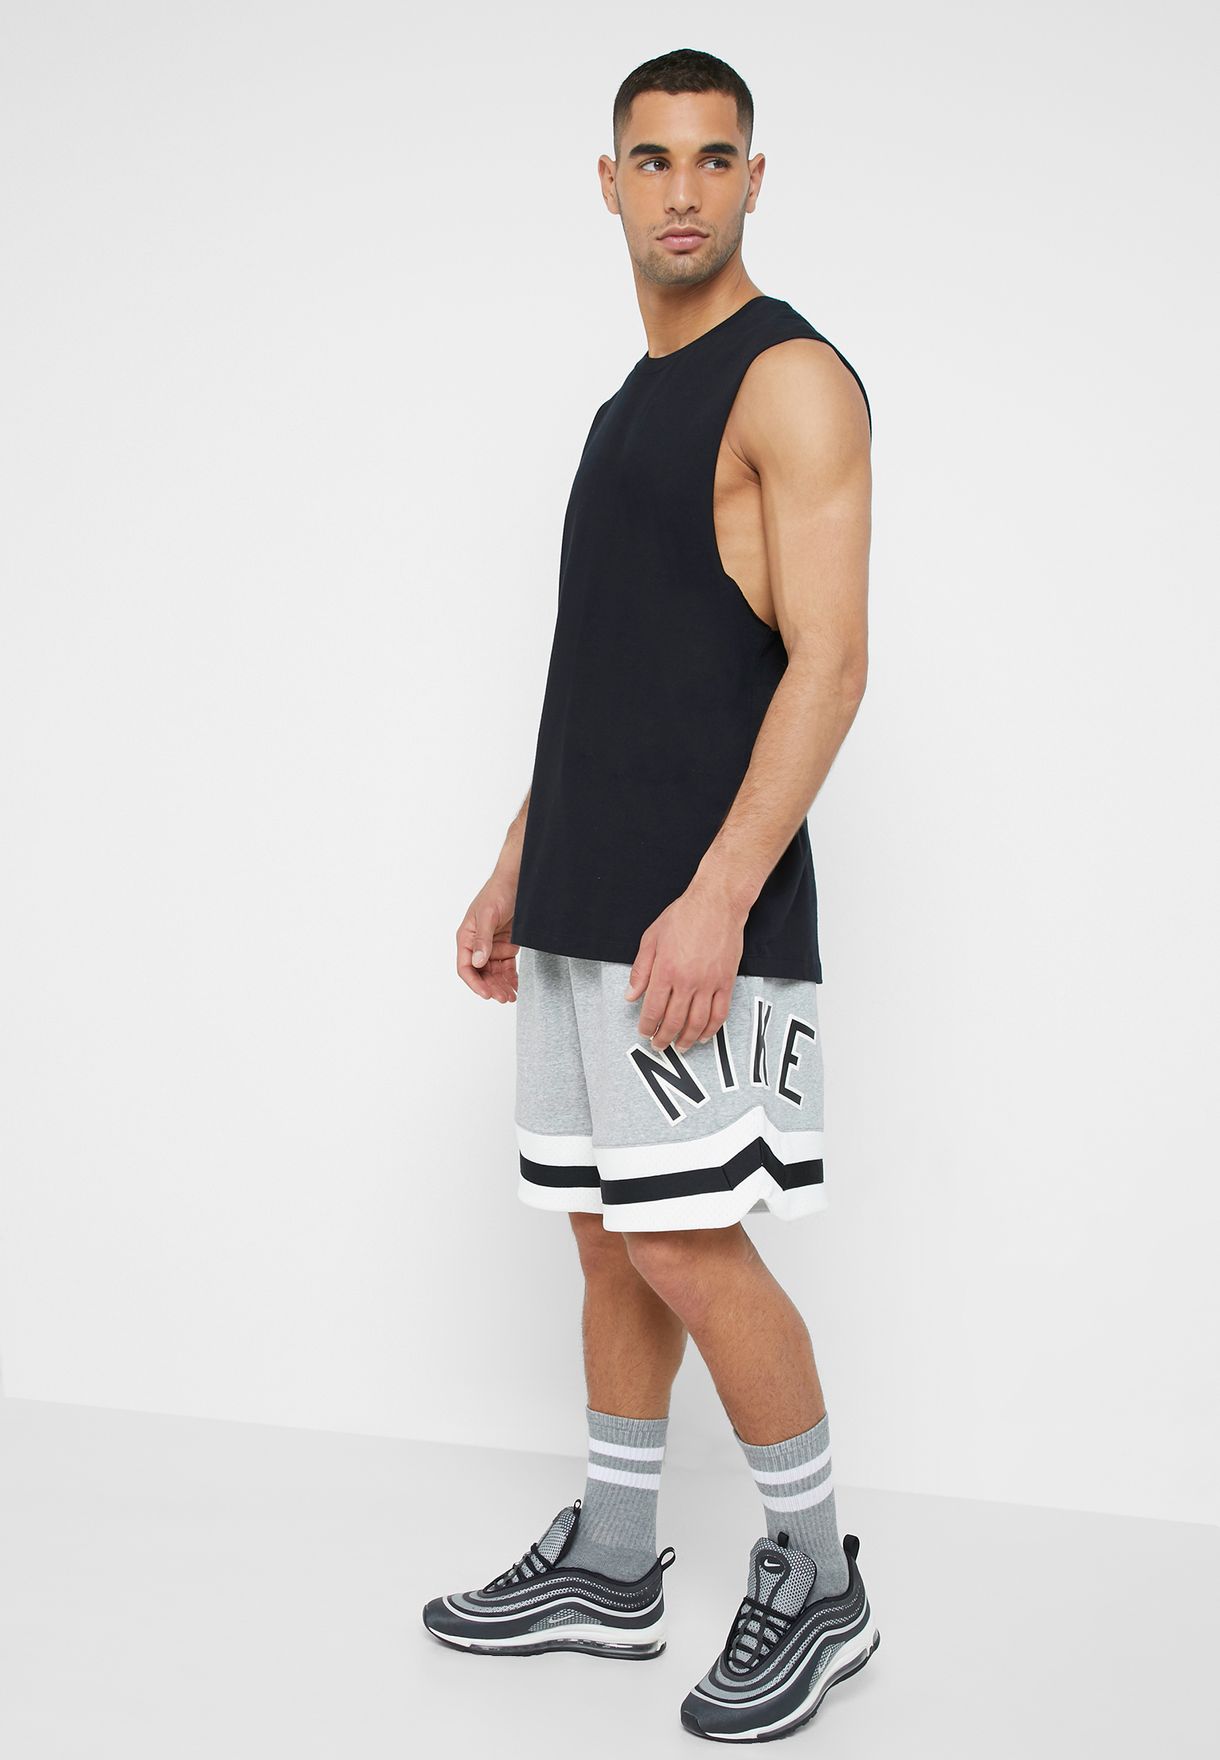 Buy > men's nike air fleece shorts > in stock